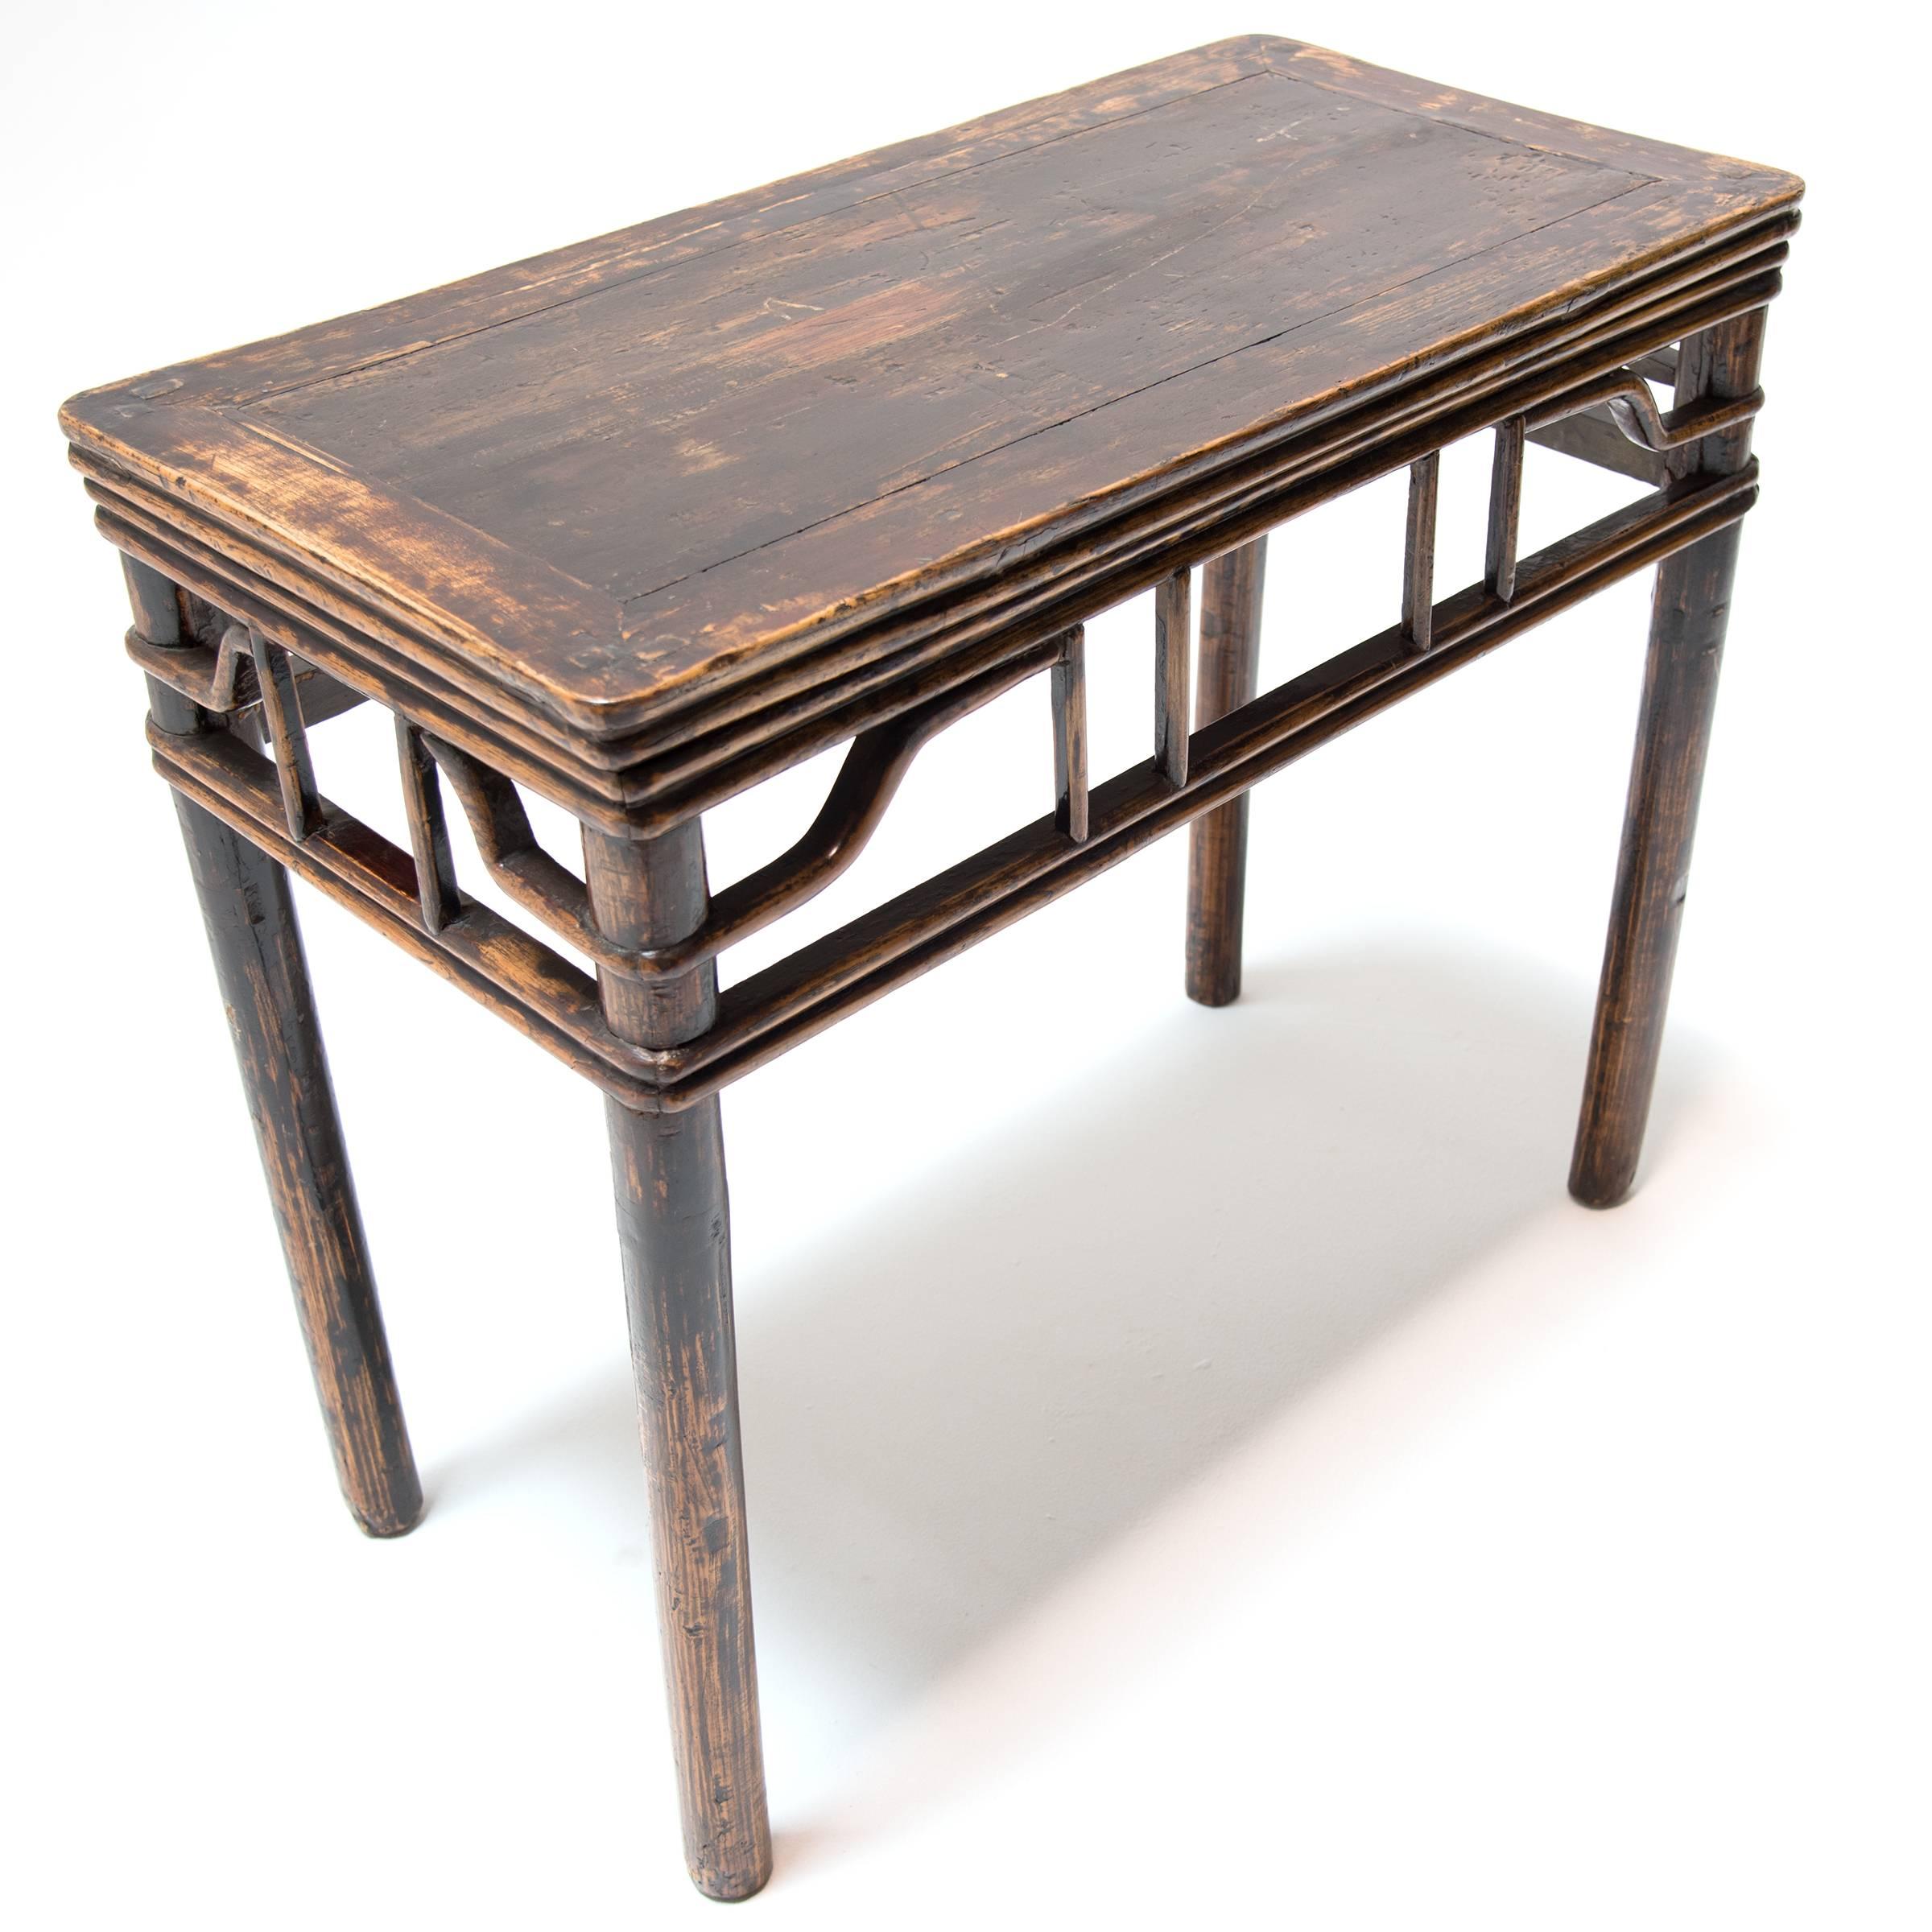 Elm Chinese Half Table with Lattice Apron, c. 1850